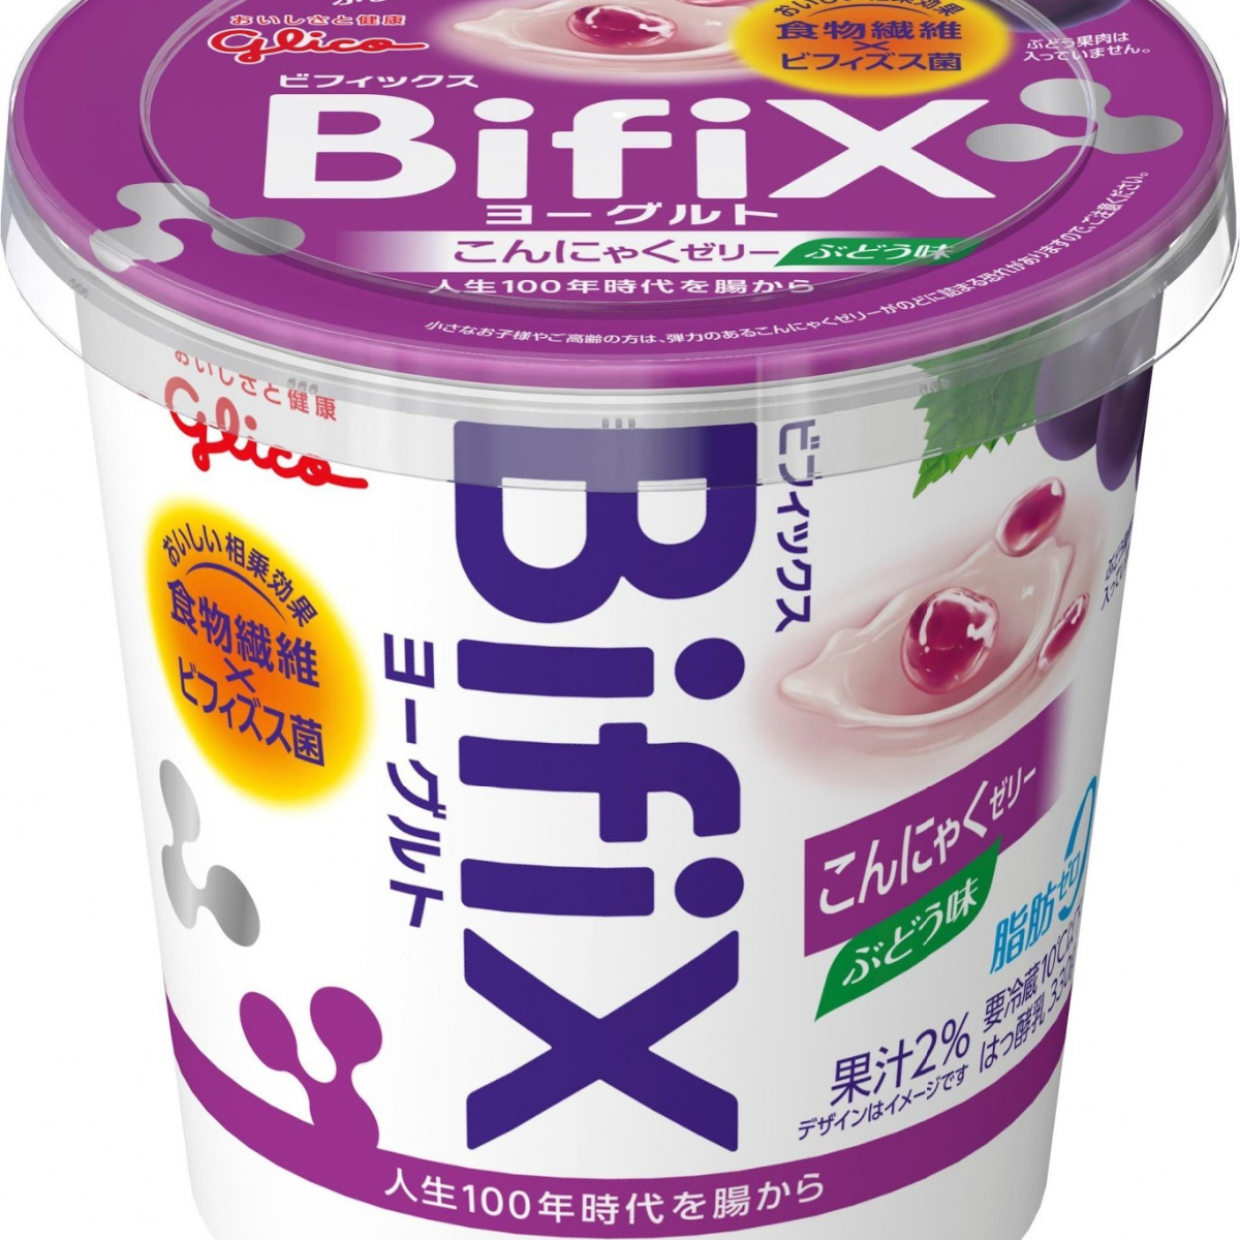  「BifiXヨーグルト」の新作はまさかのこんにゃくゼリー入り！？実際に食べてみたところ… 